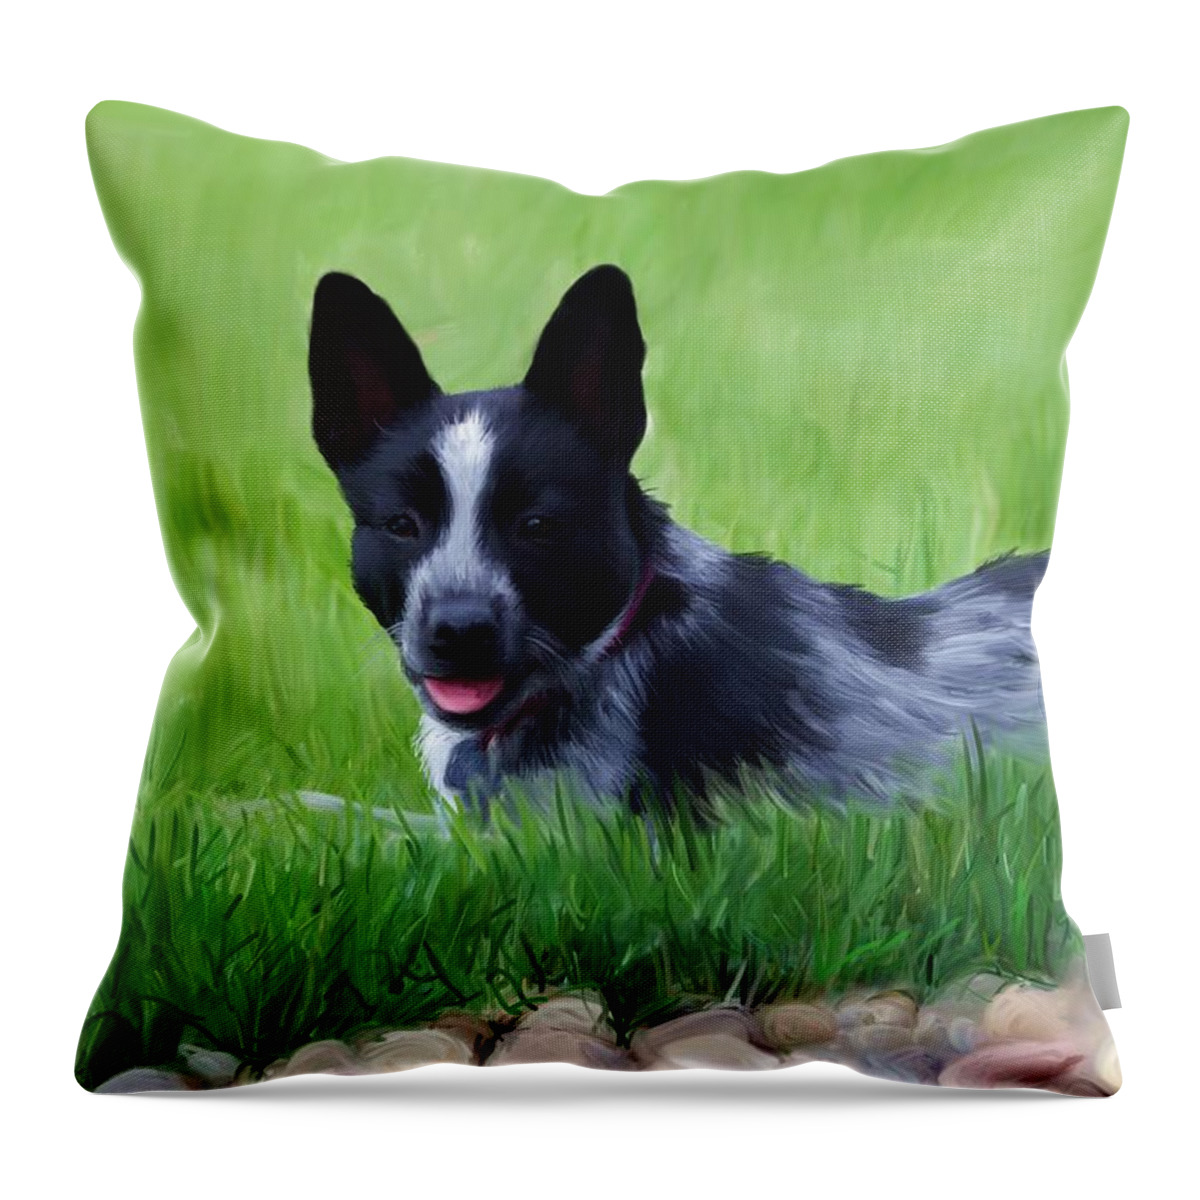 Stock Dog Throw Pillow featuring the digital art Stock dog named Brook by Debra Baldwin